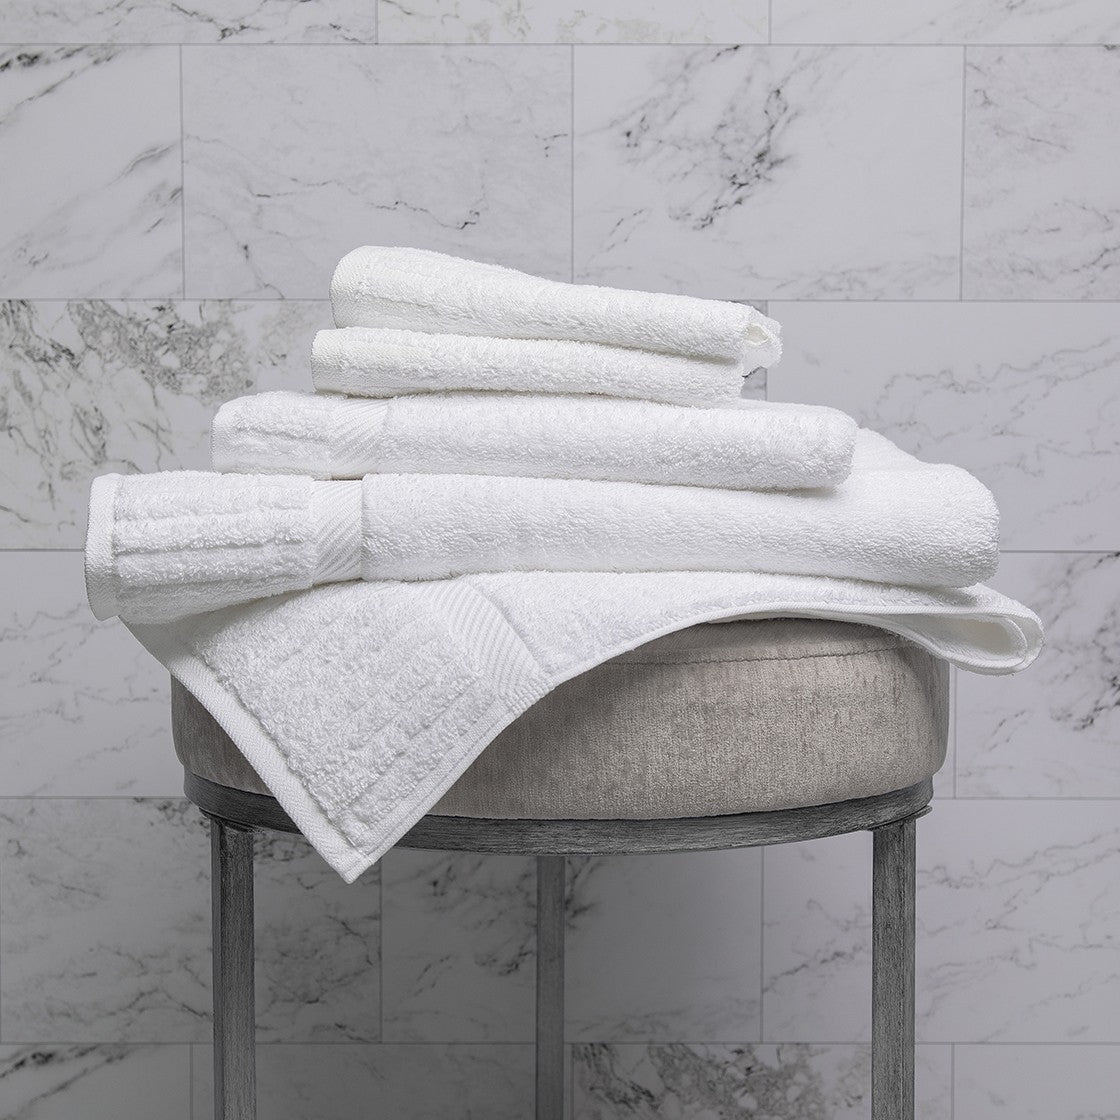 Pegasus Textiles Oasis 600 Luxury Hotel & Spa Quality White Towels